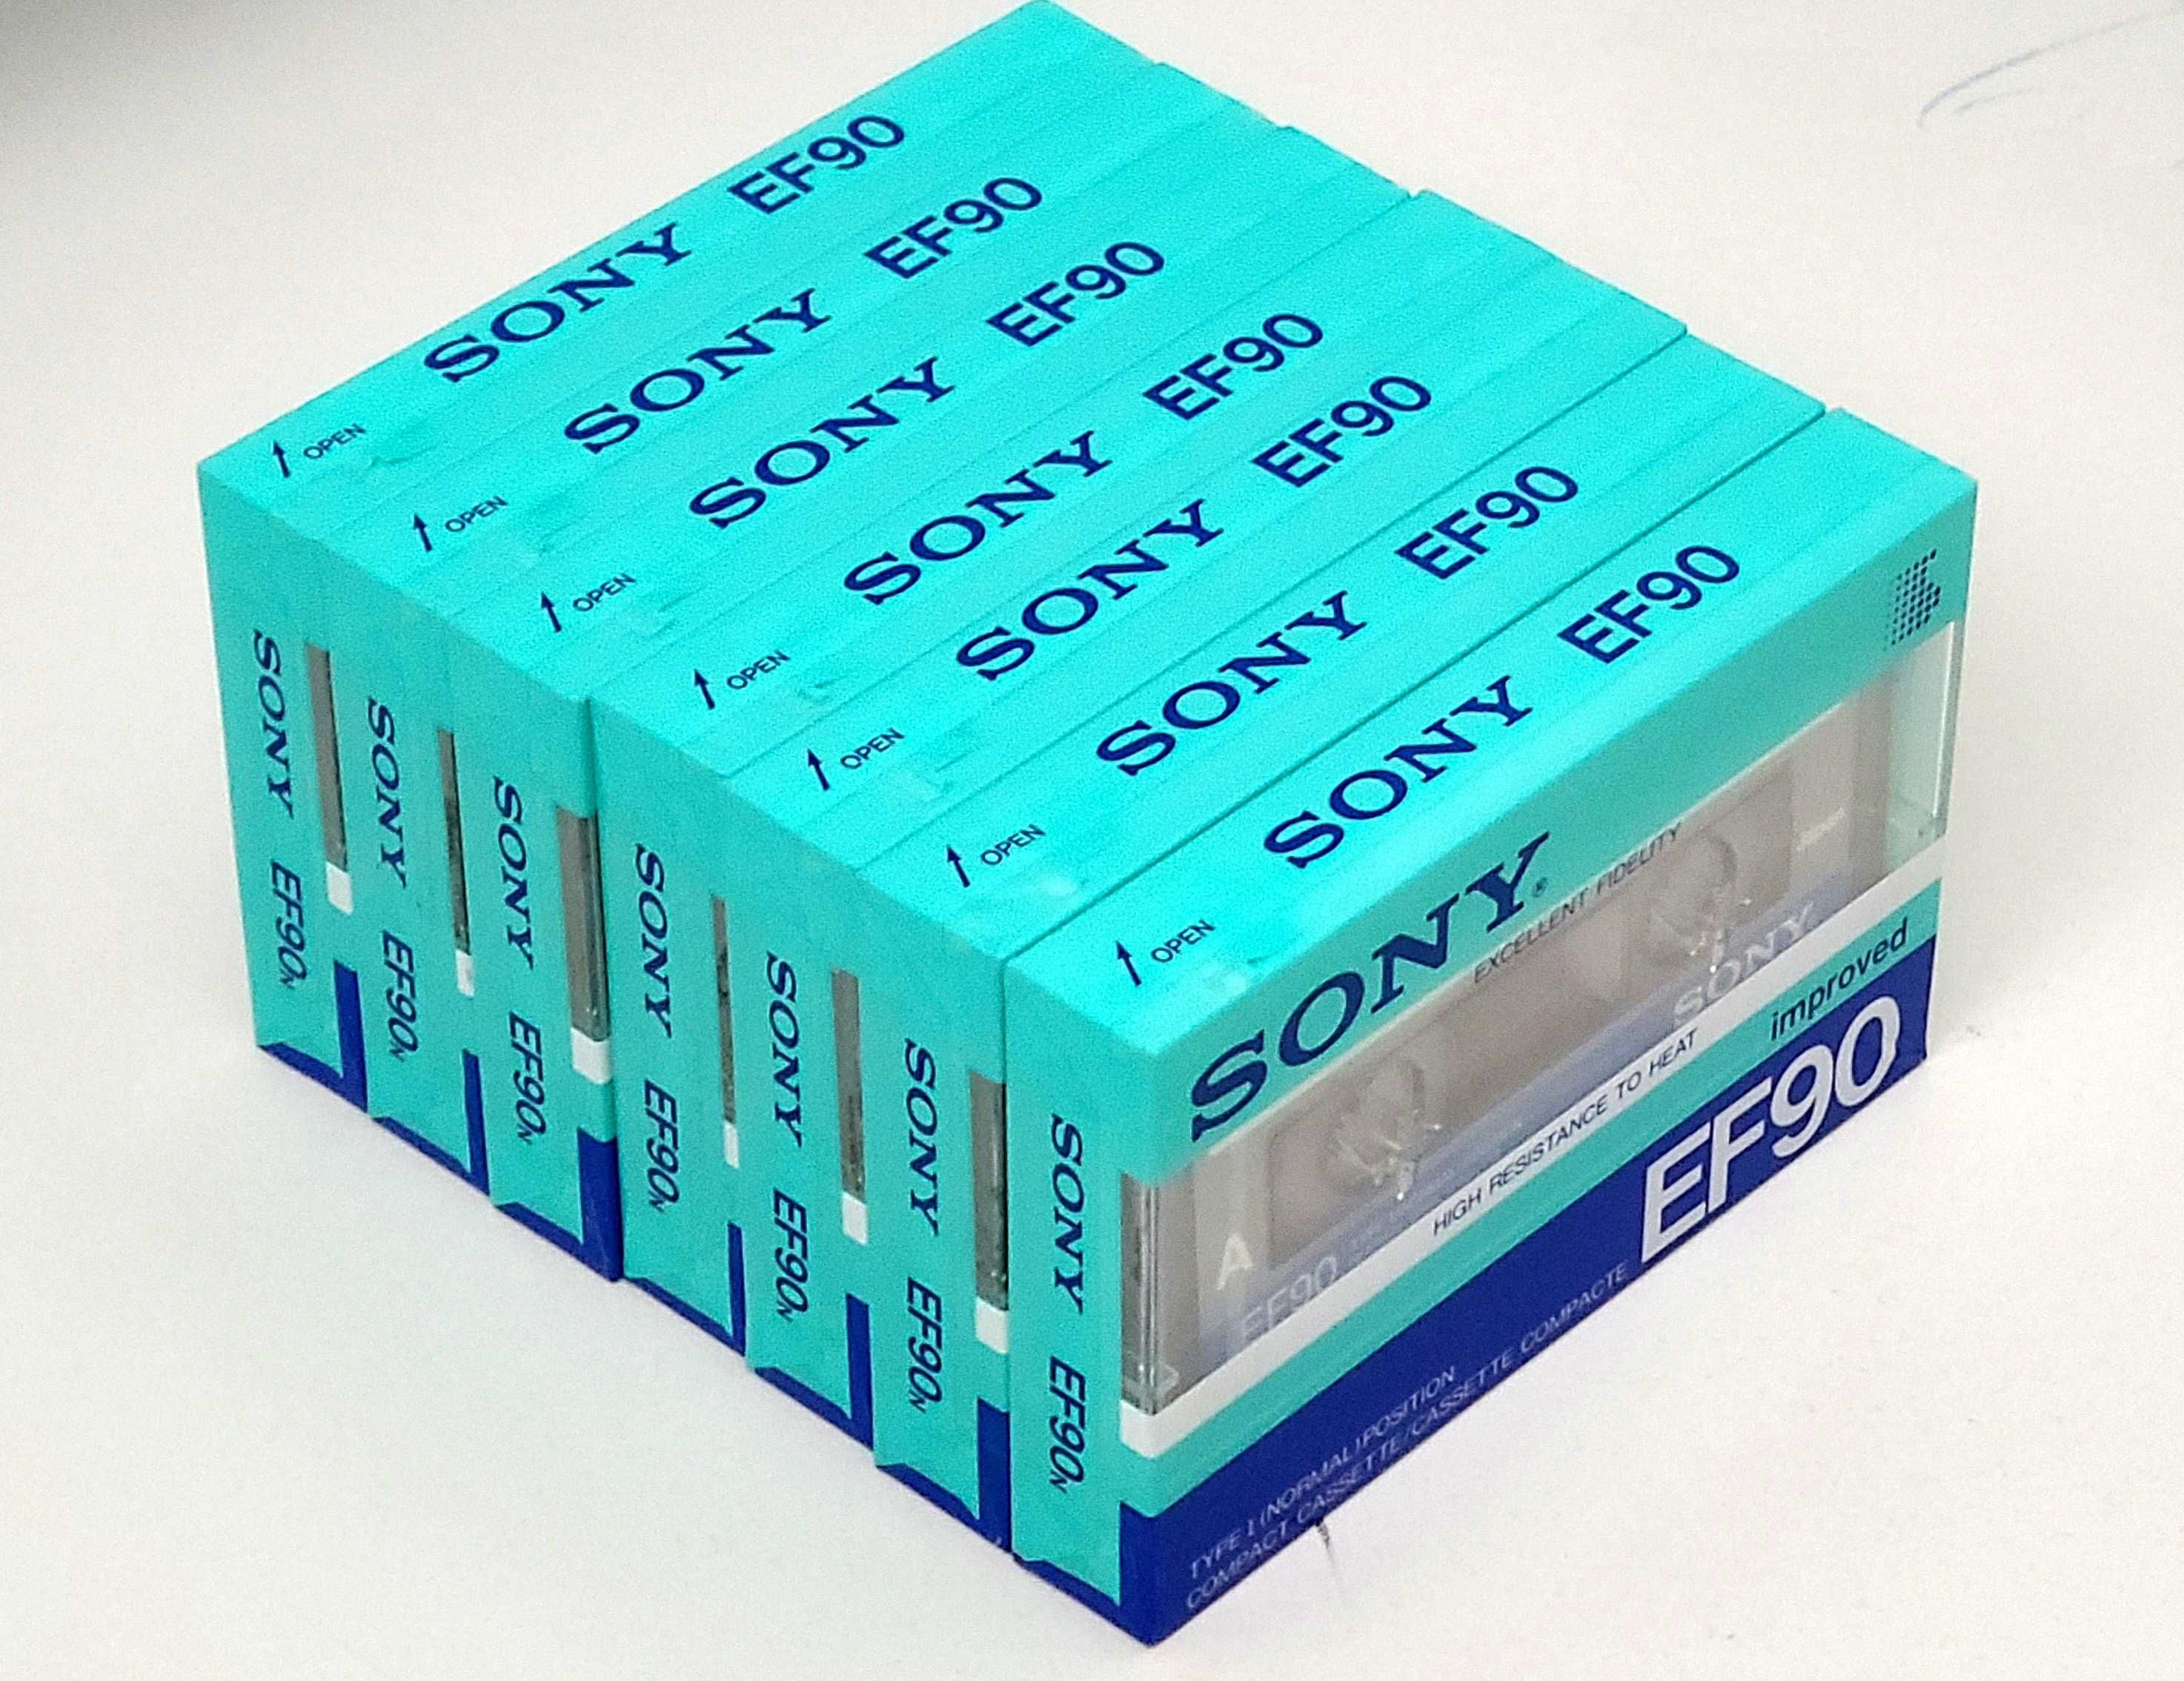 Кассеты "Sony", оригинал, made in Japan"